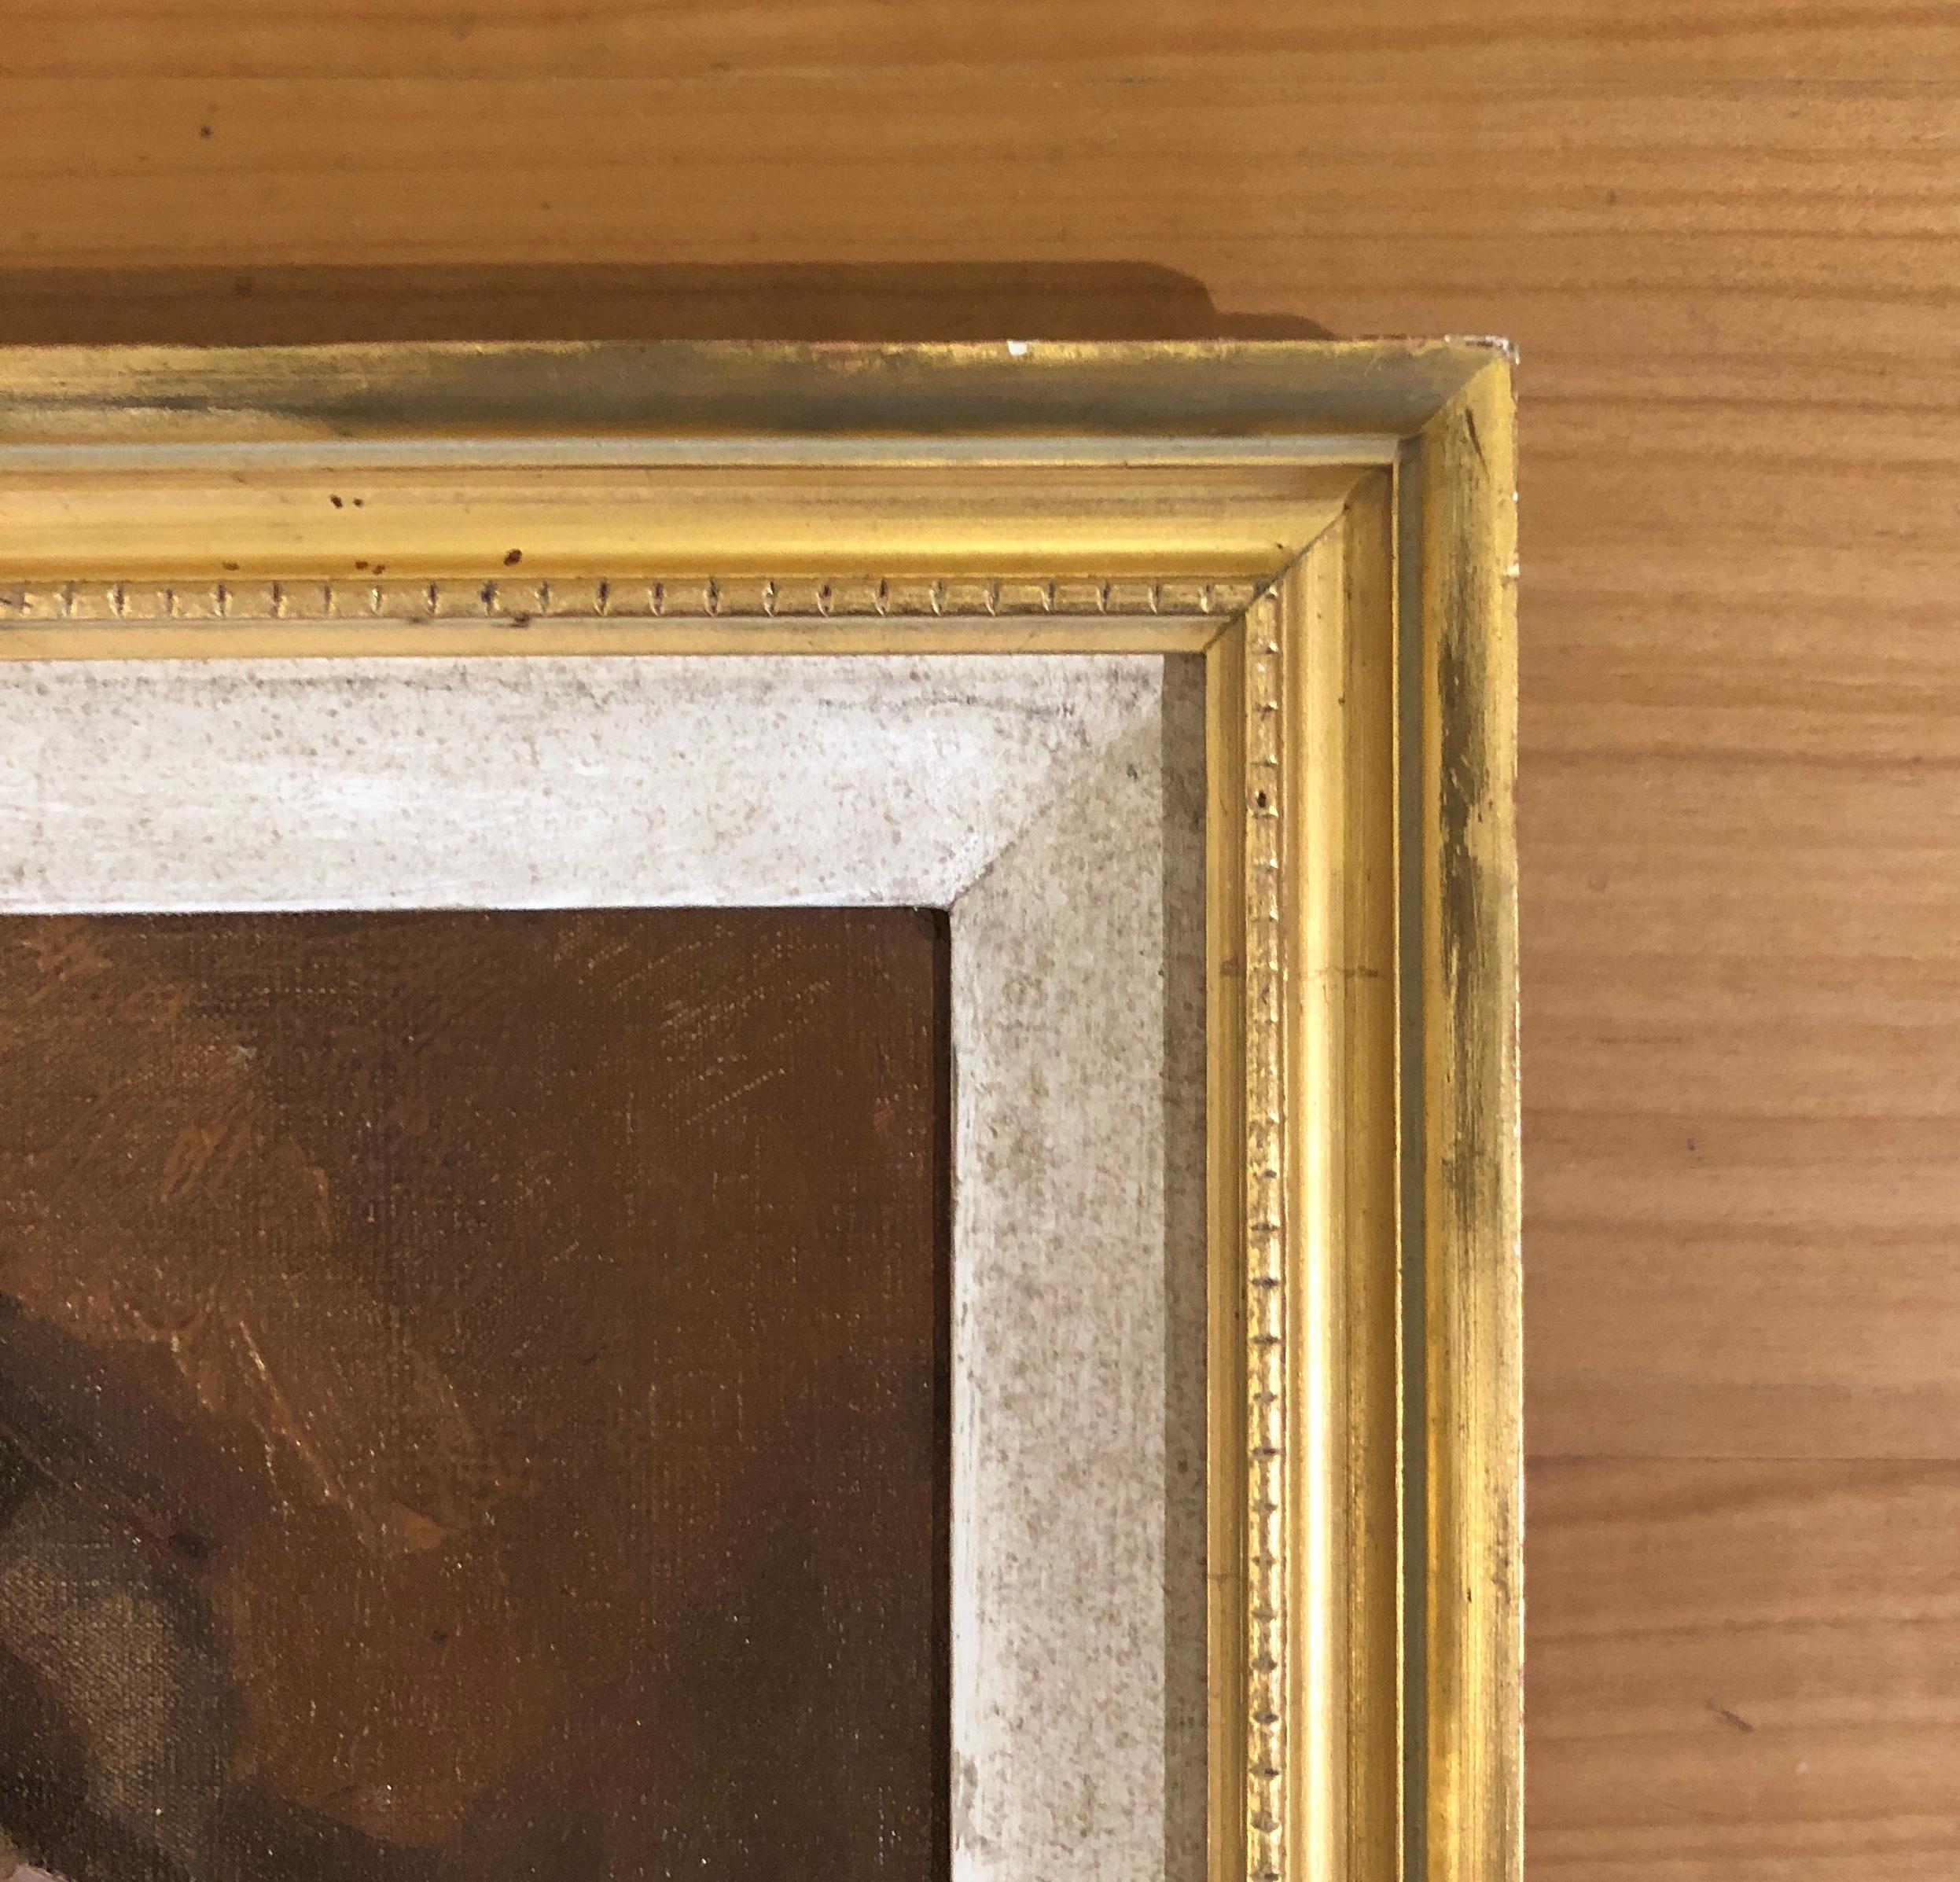 Artwork on canvas

Golden wooden frame
47.7 x 37.3 x 2.8 cm